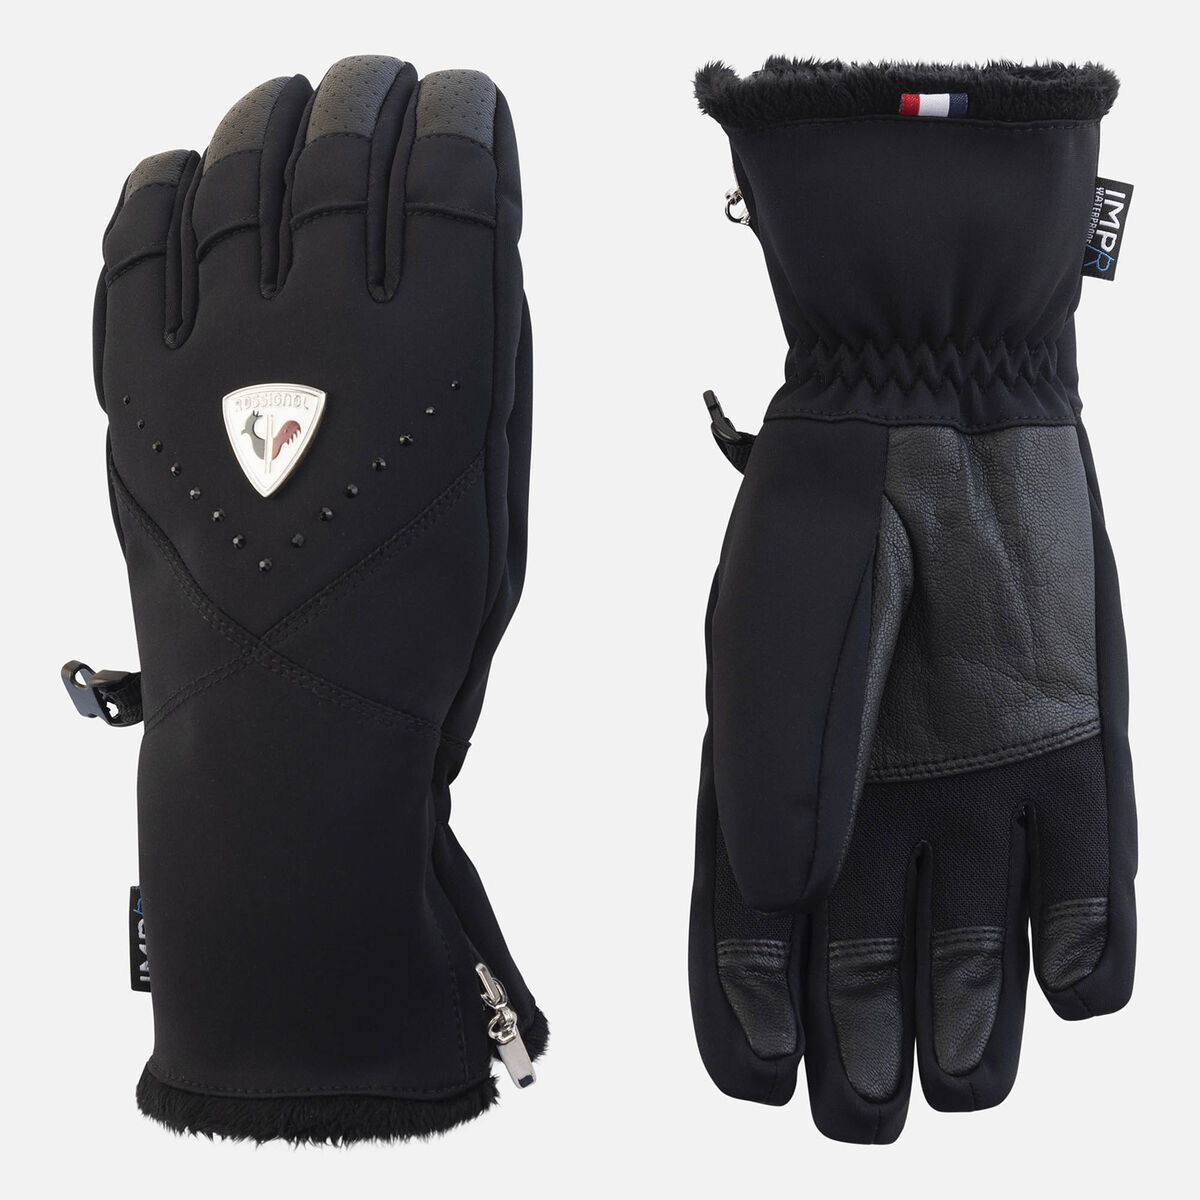 Rossignol Women's Absolut waterproof ski gloves Black